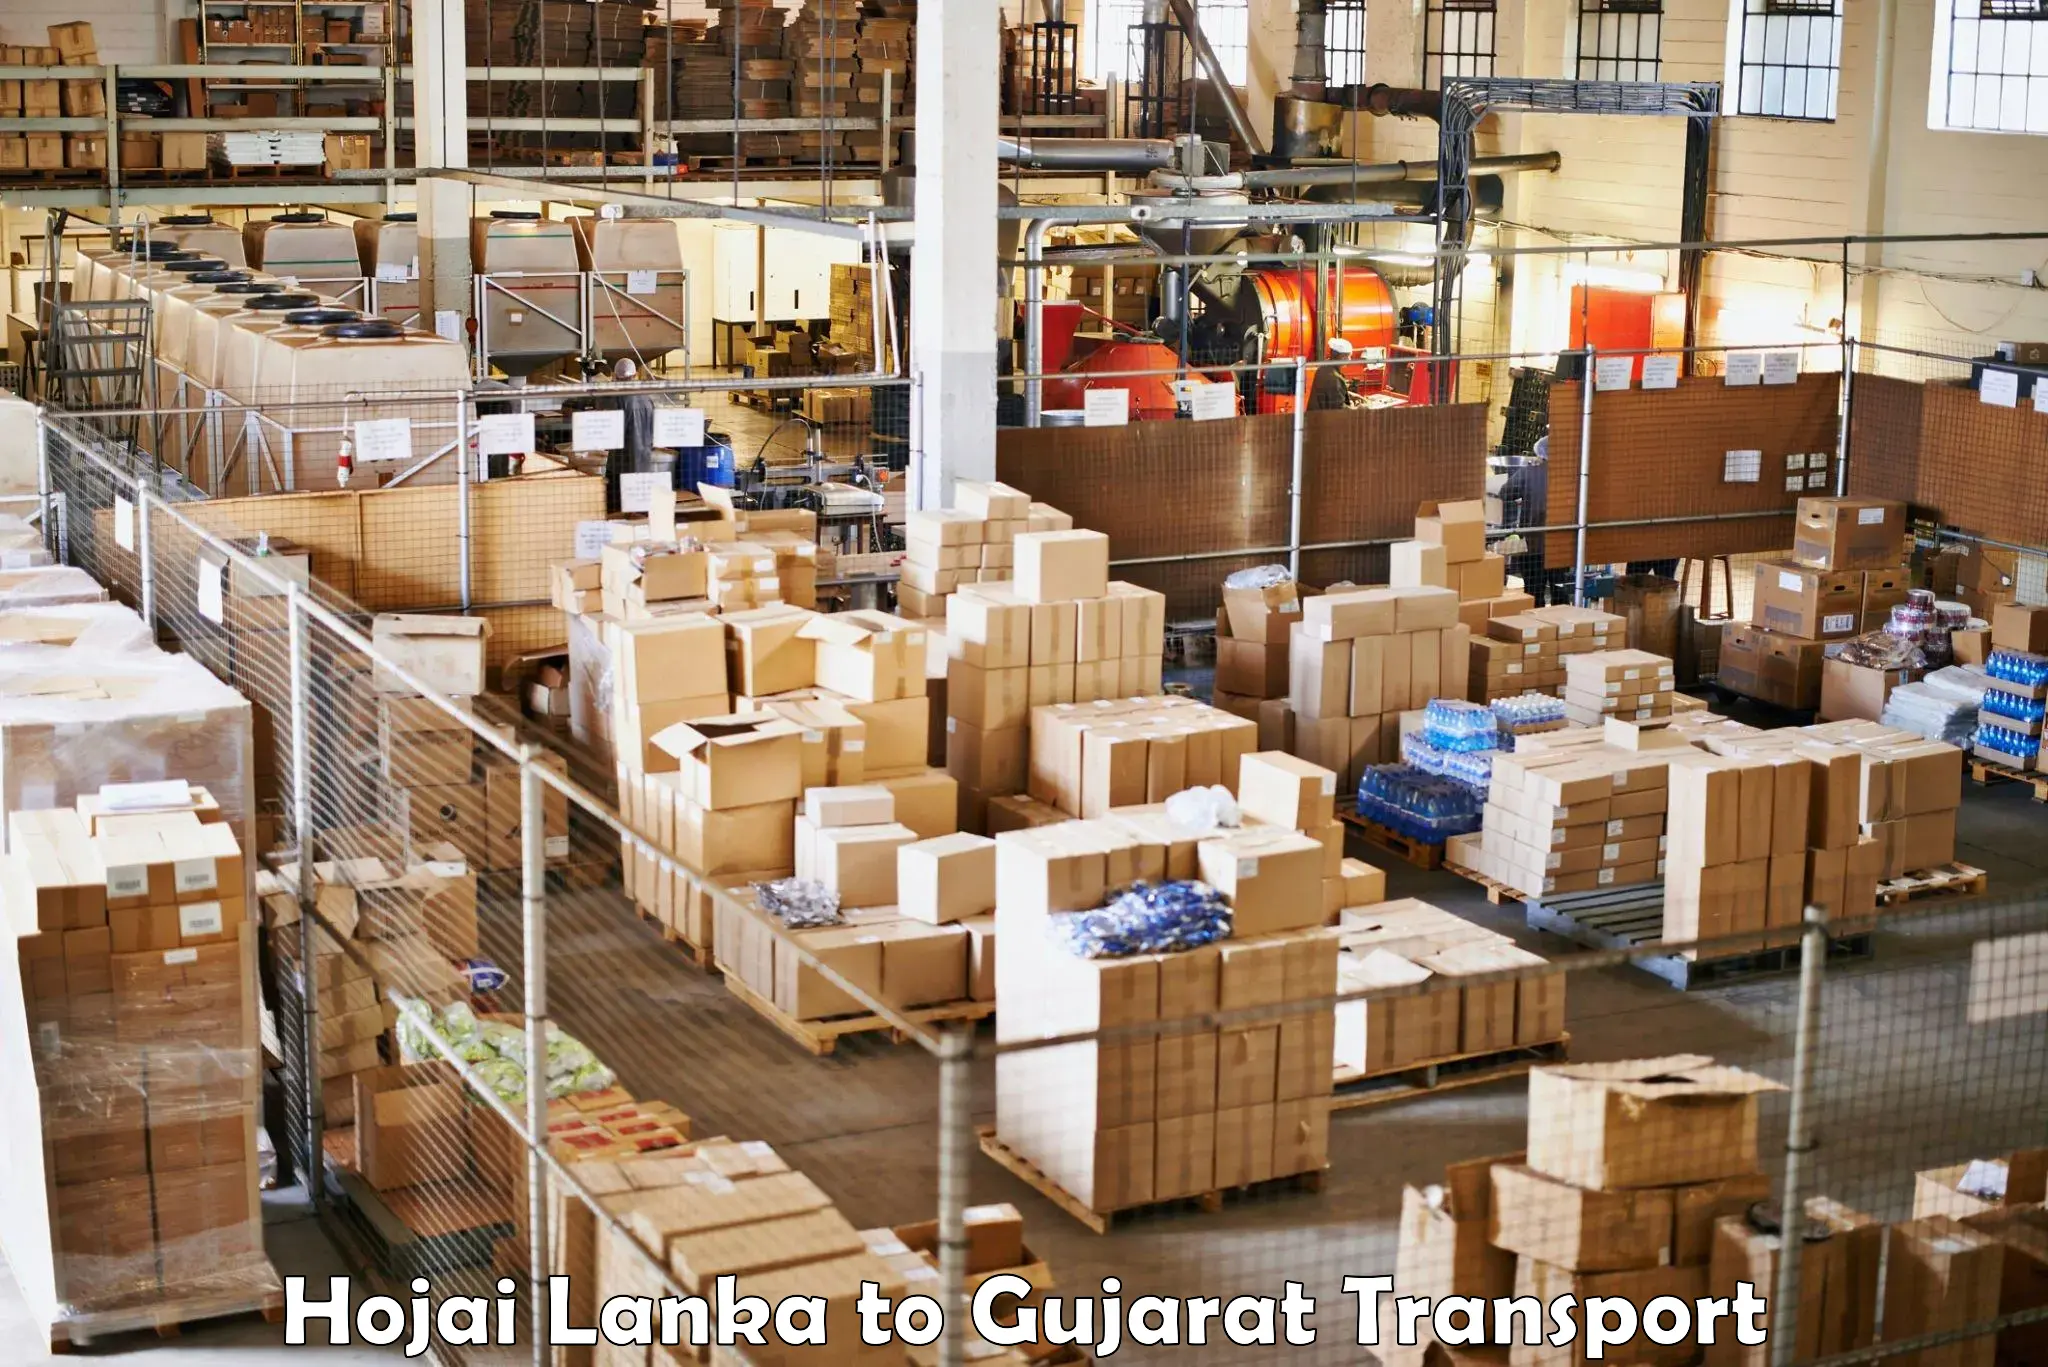 Truck transport companies in India Hojai Lanka to Matar